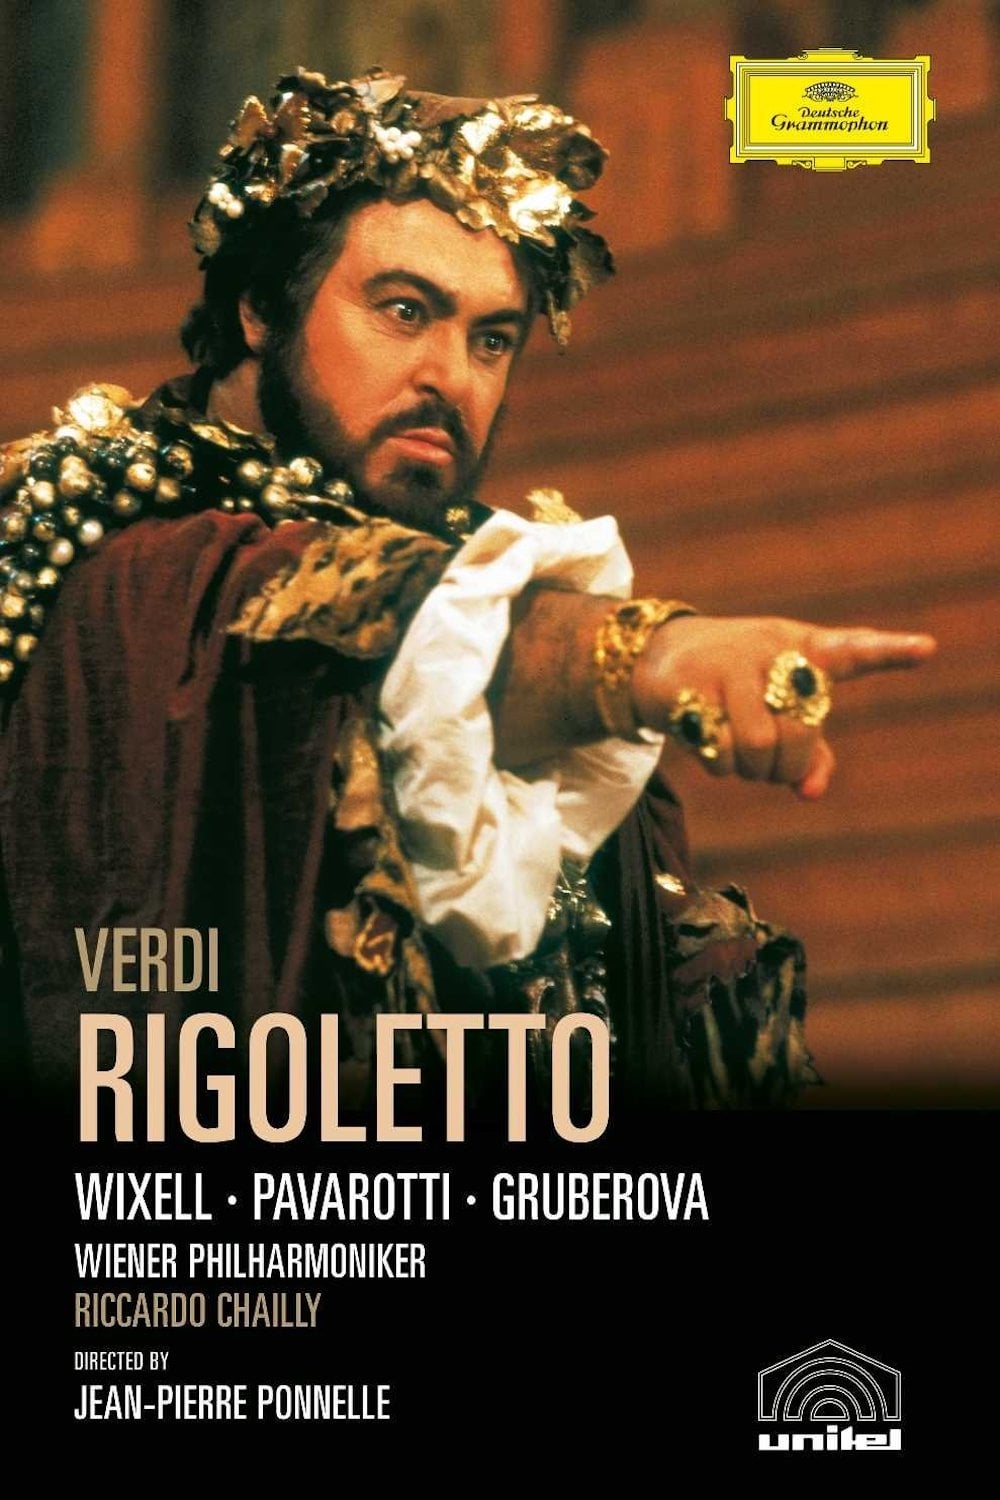 Verdi: Rigoletto (1982)